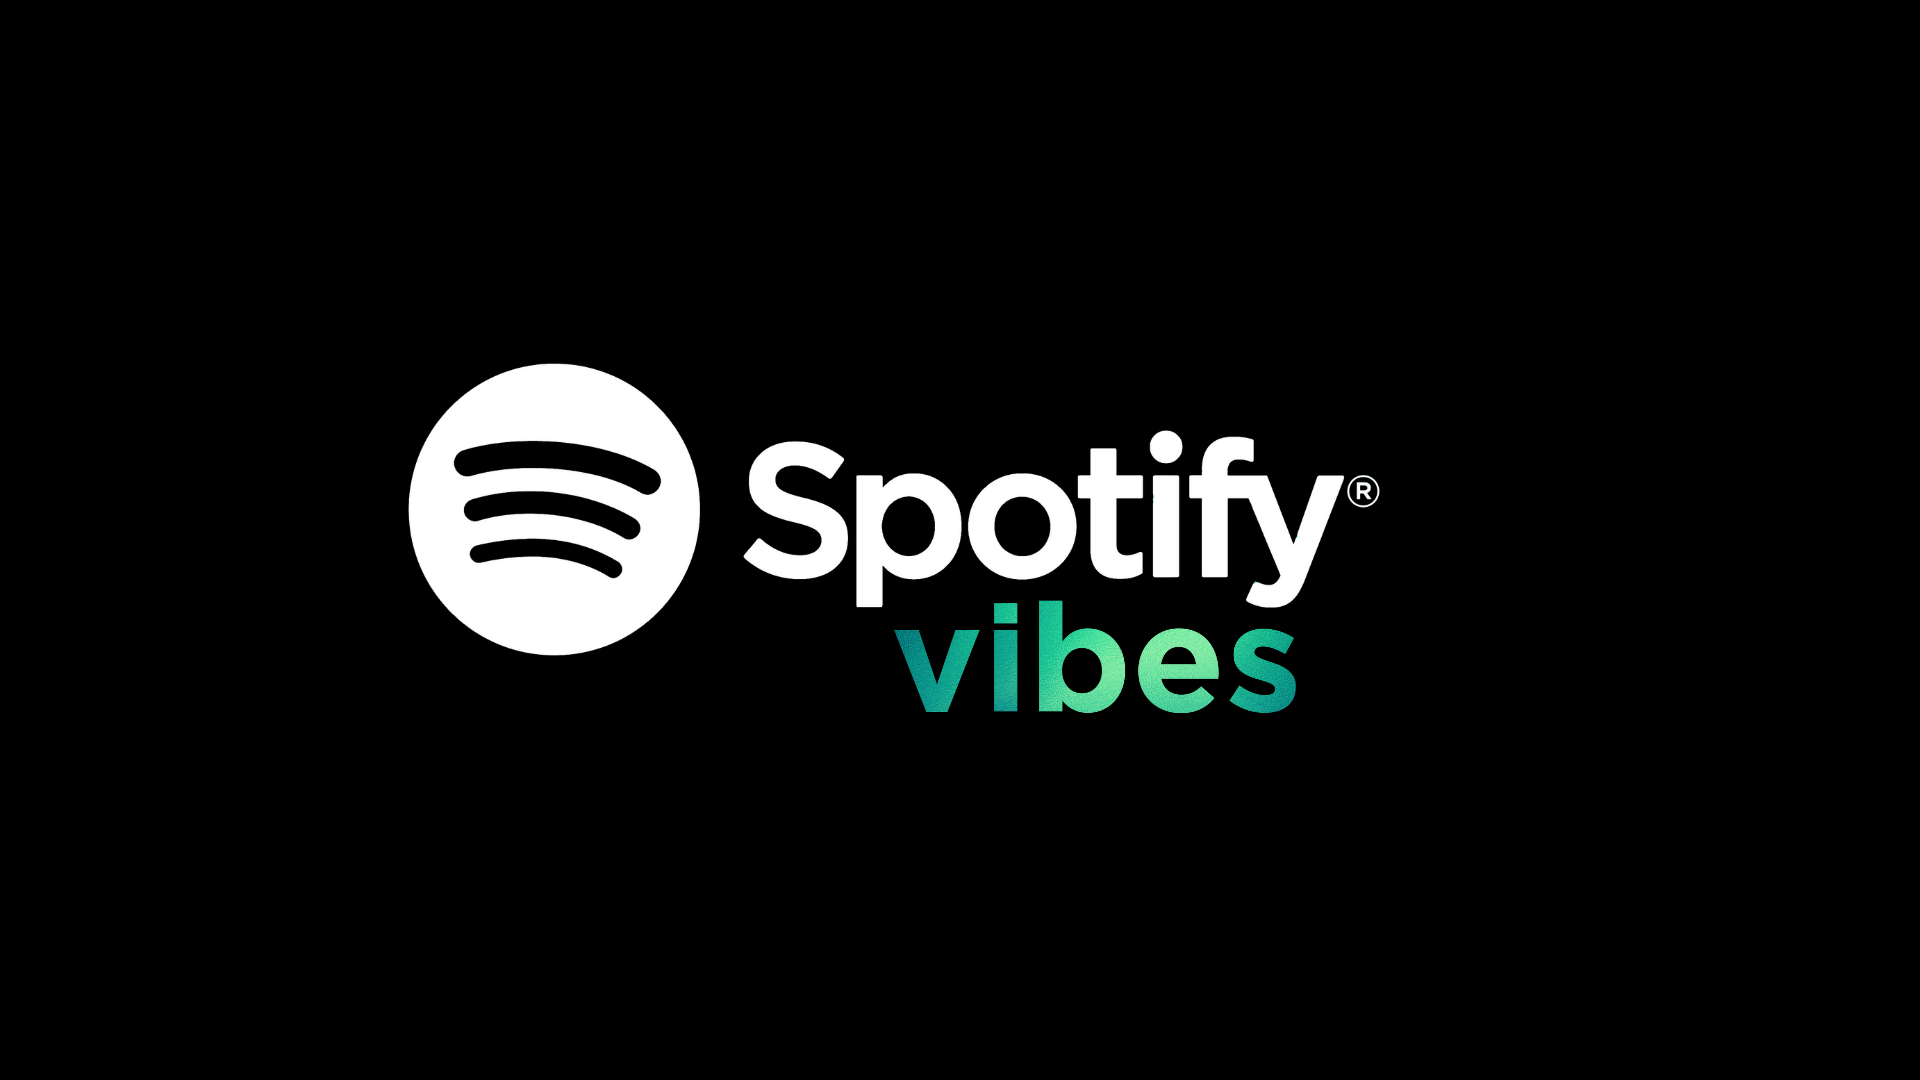 Spotify Vibes UX/UI Design